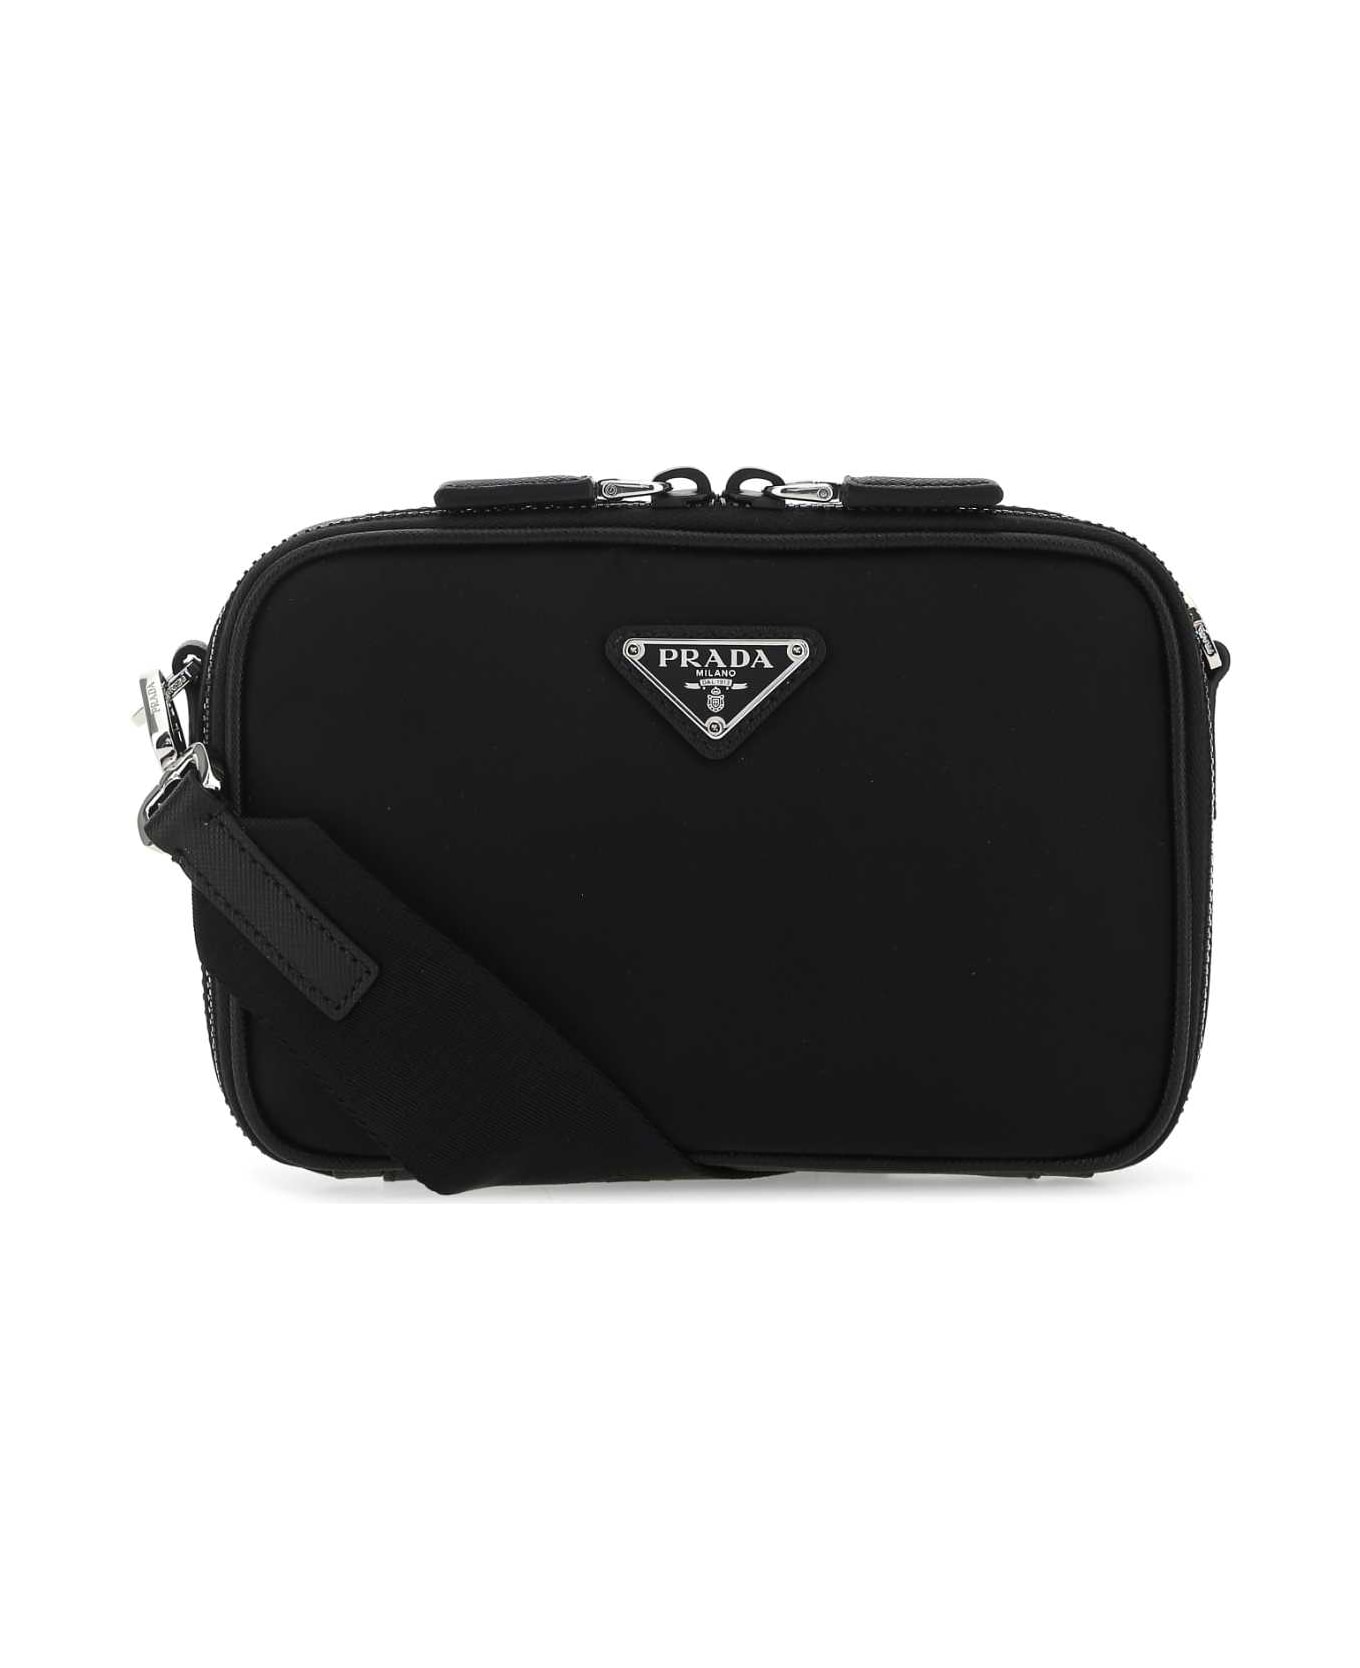 Prada Black Leather And Nylon Crossbody Bag - F0002